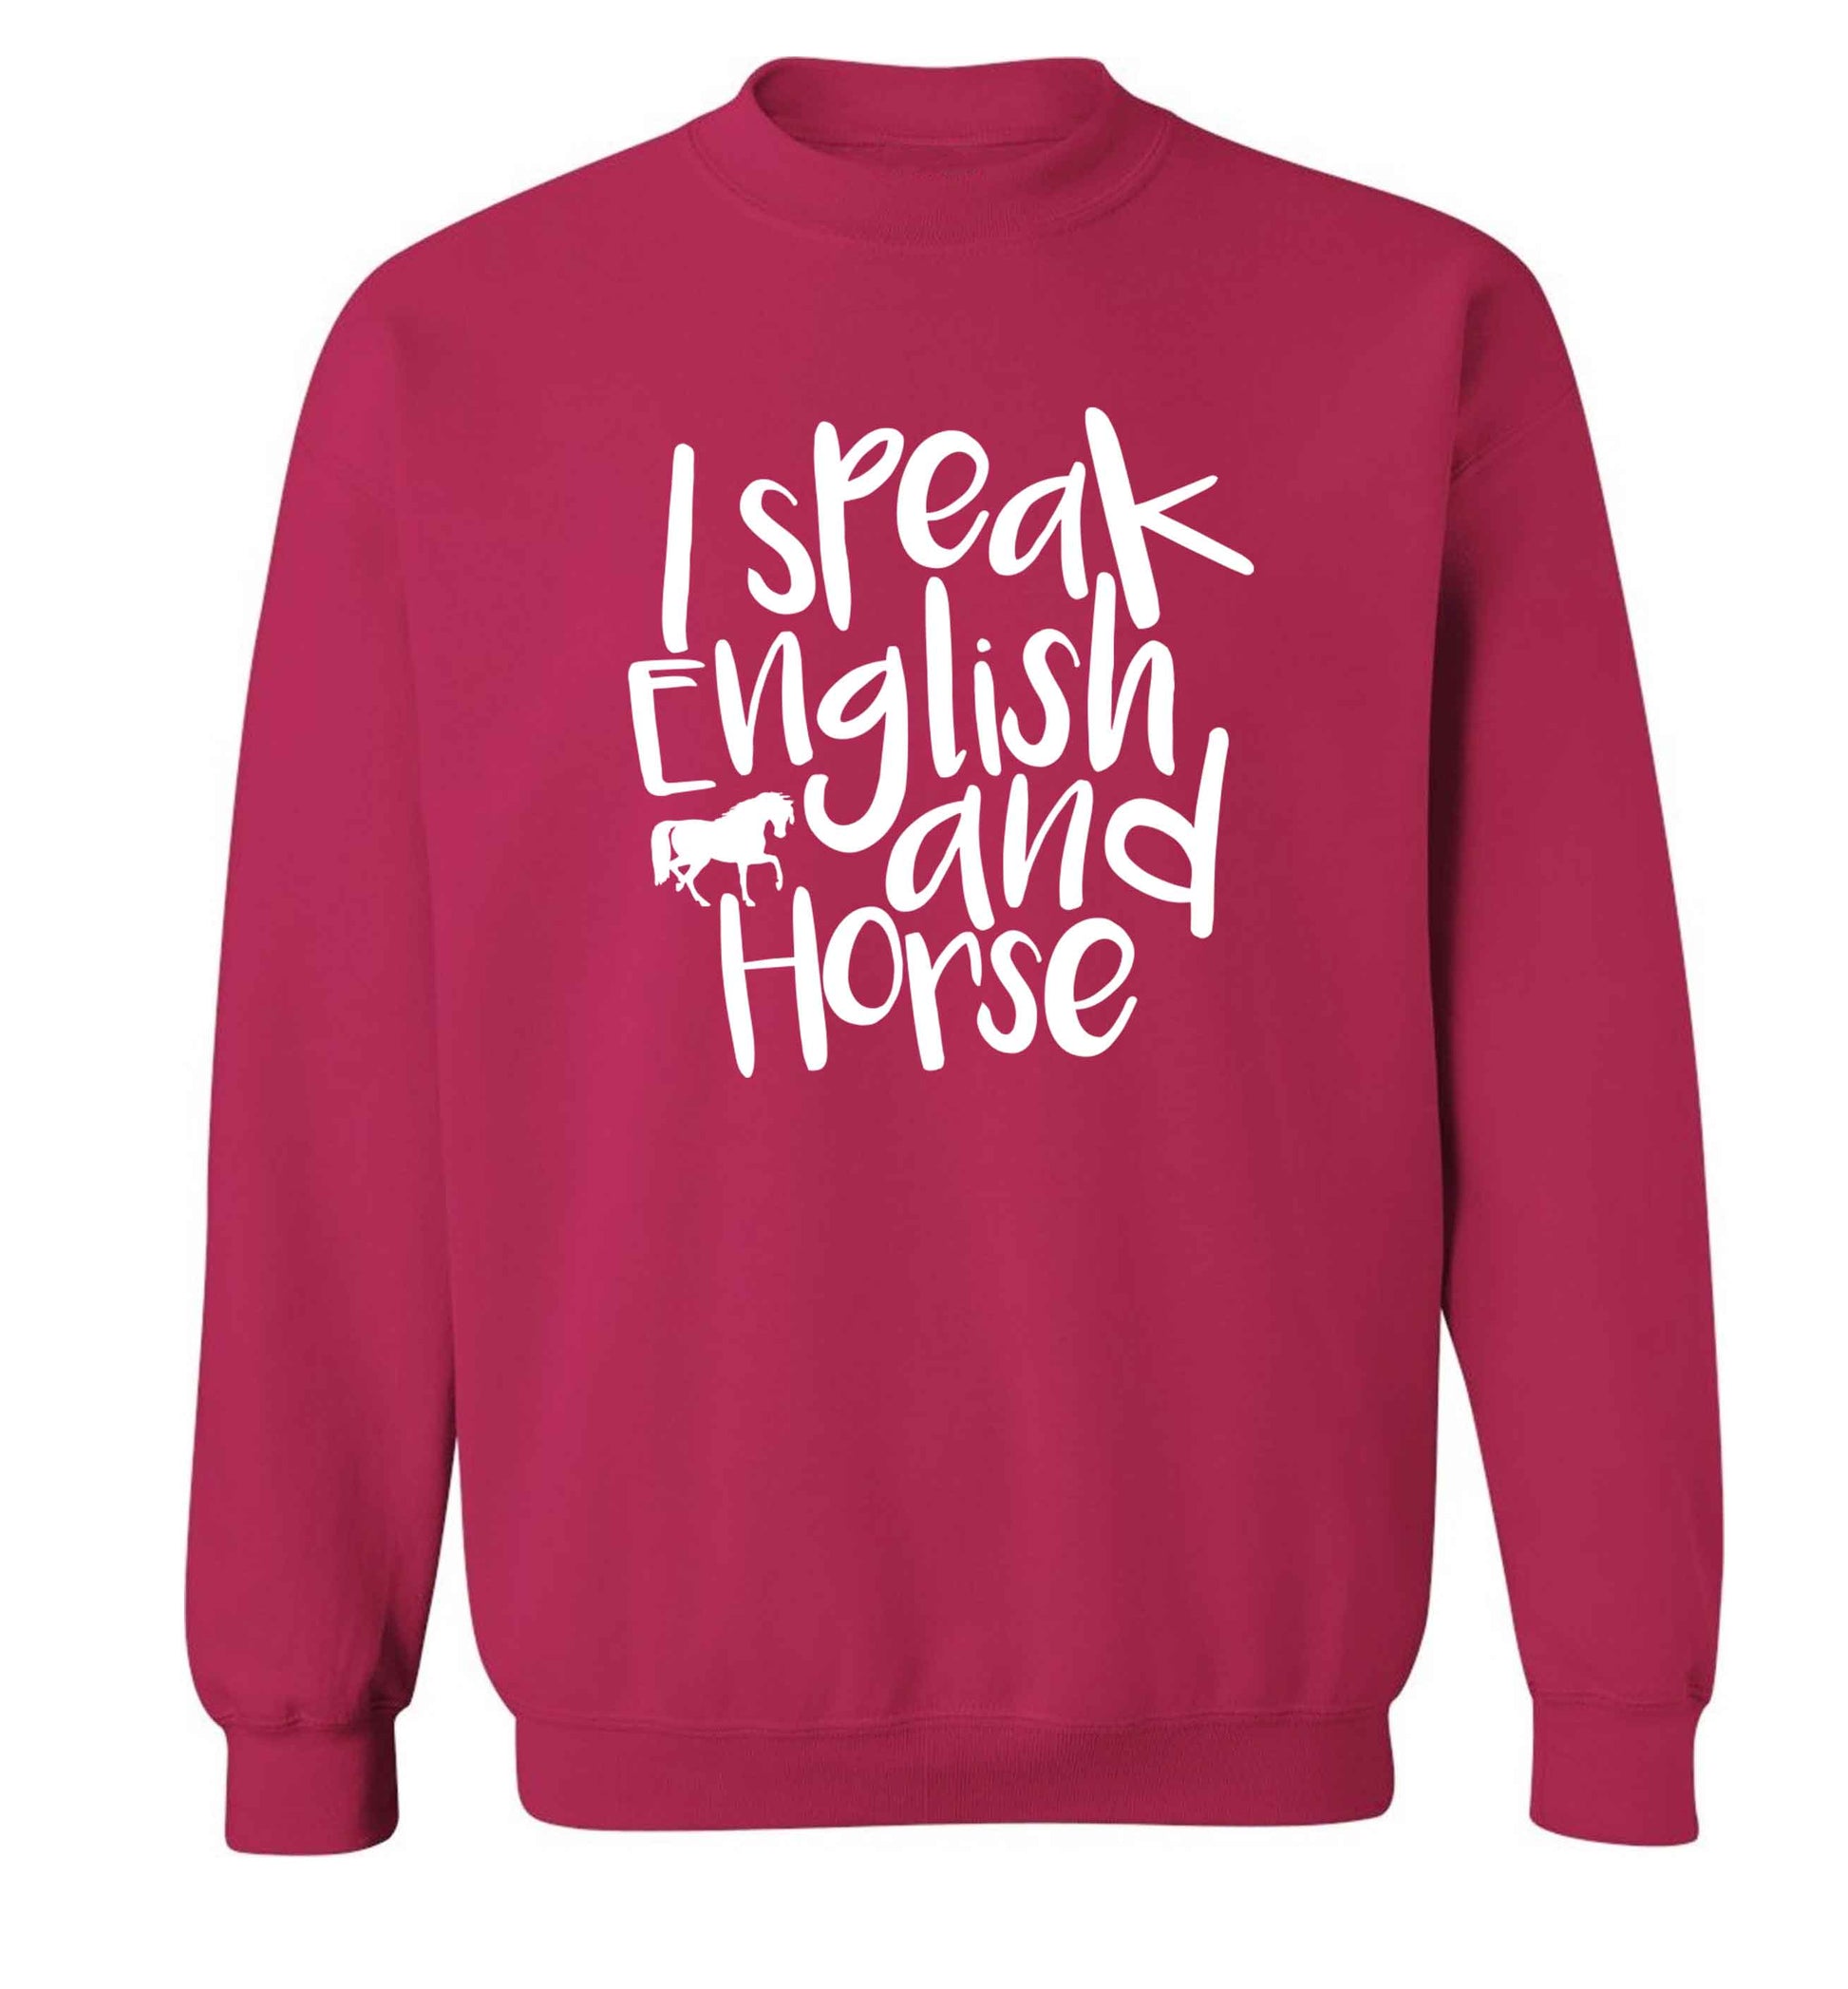 I speak English and horse adult's unisex pink sweater 2XL